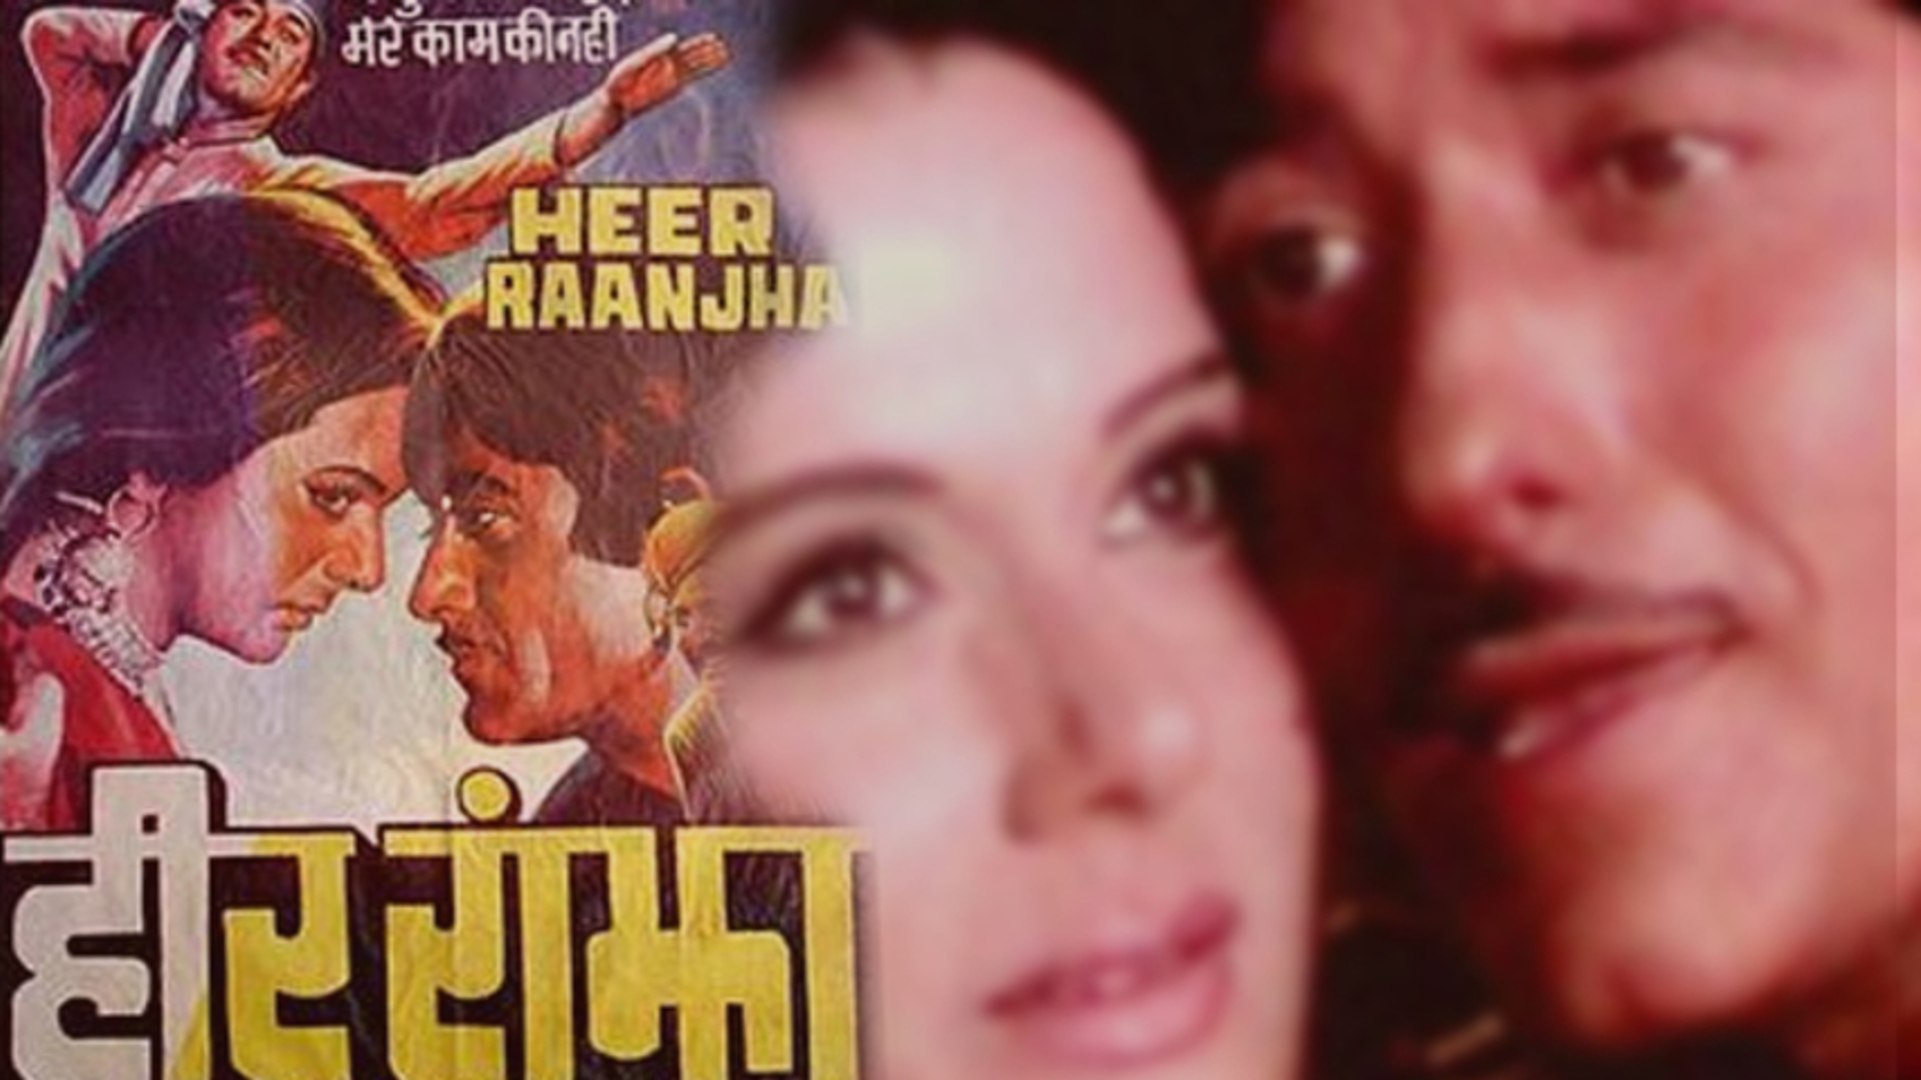 Heer ranjha 1970 hindi full movie free download